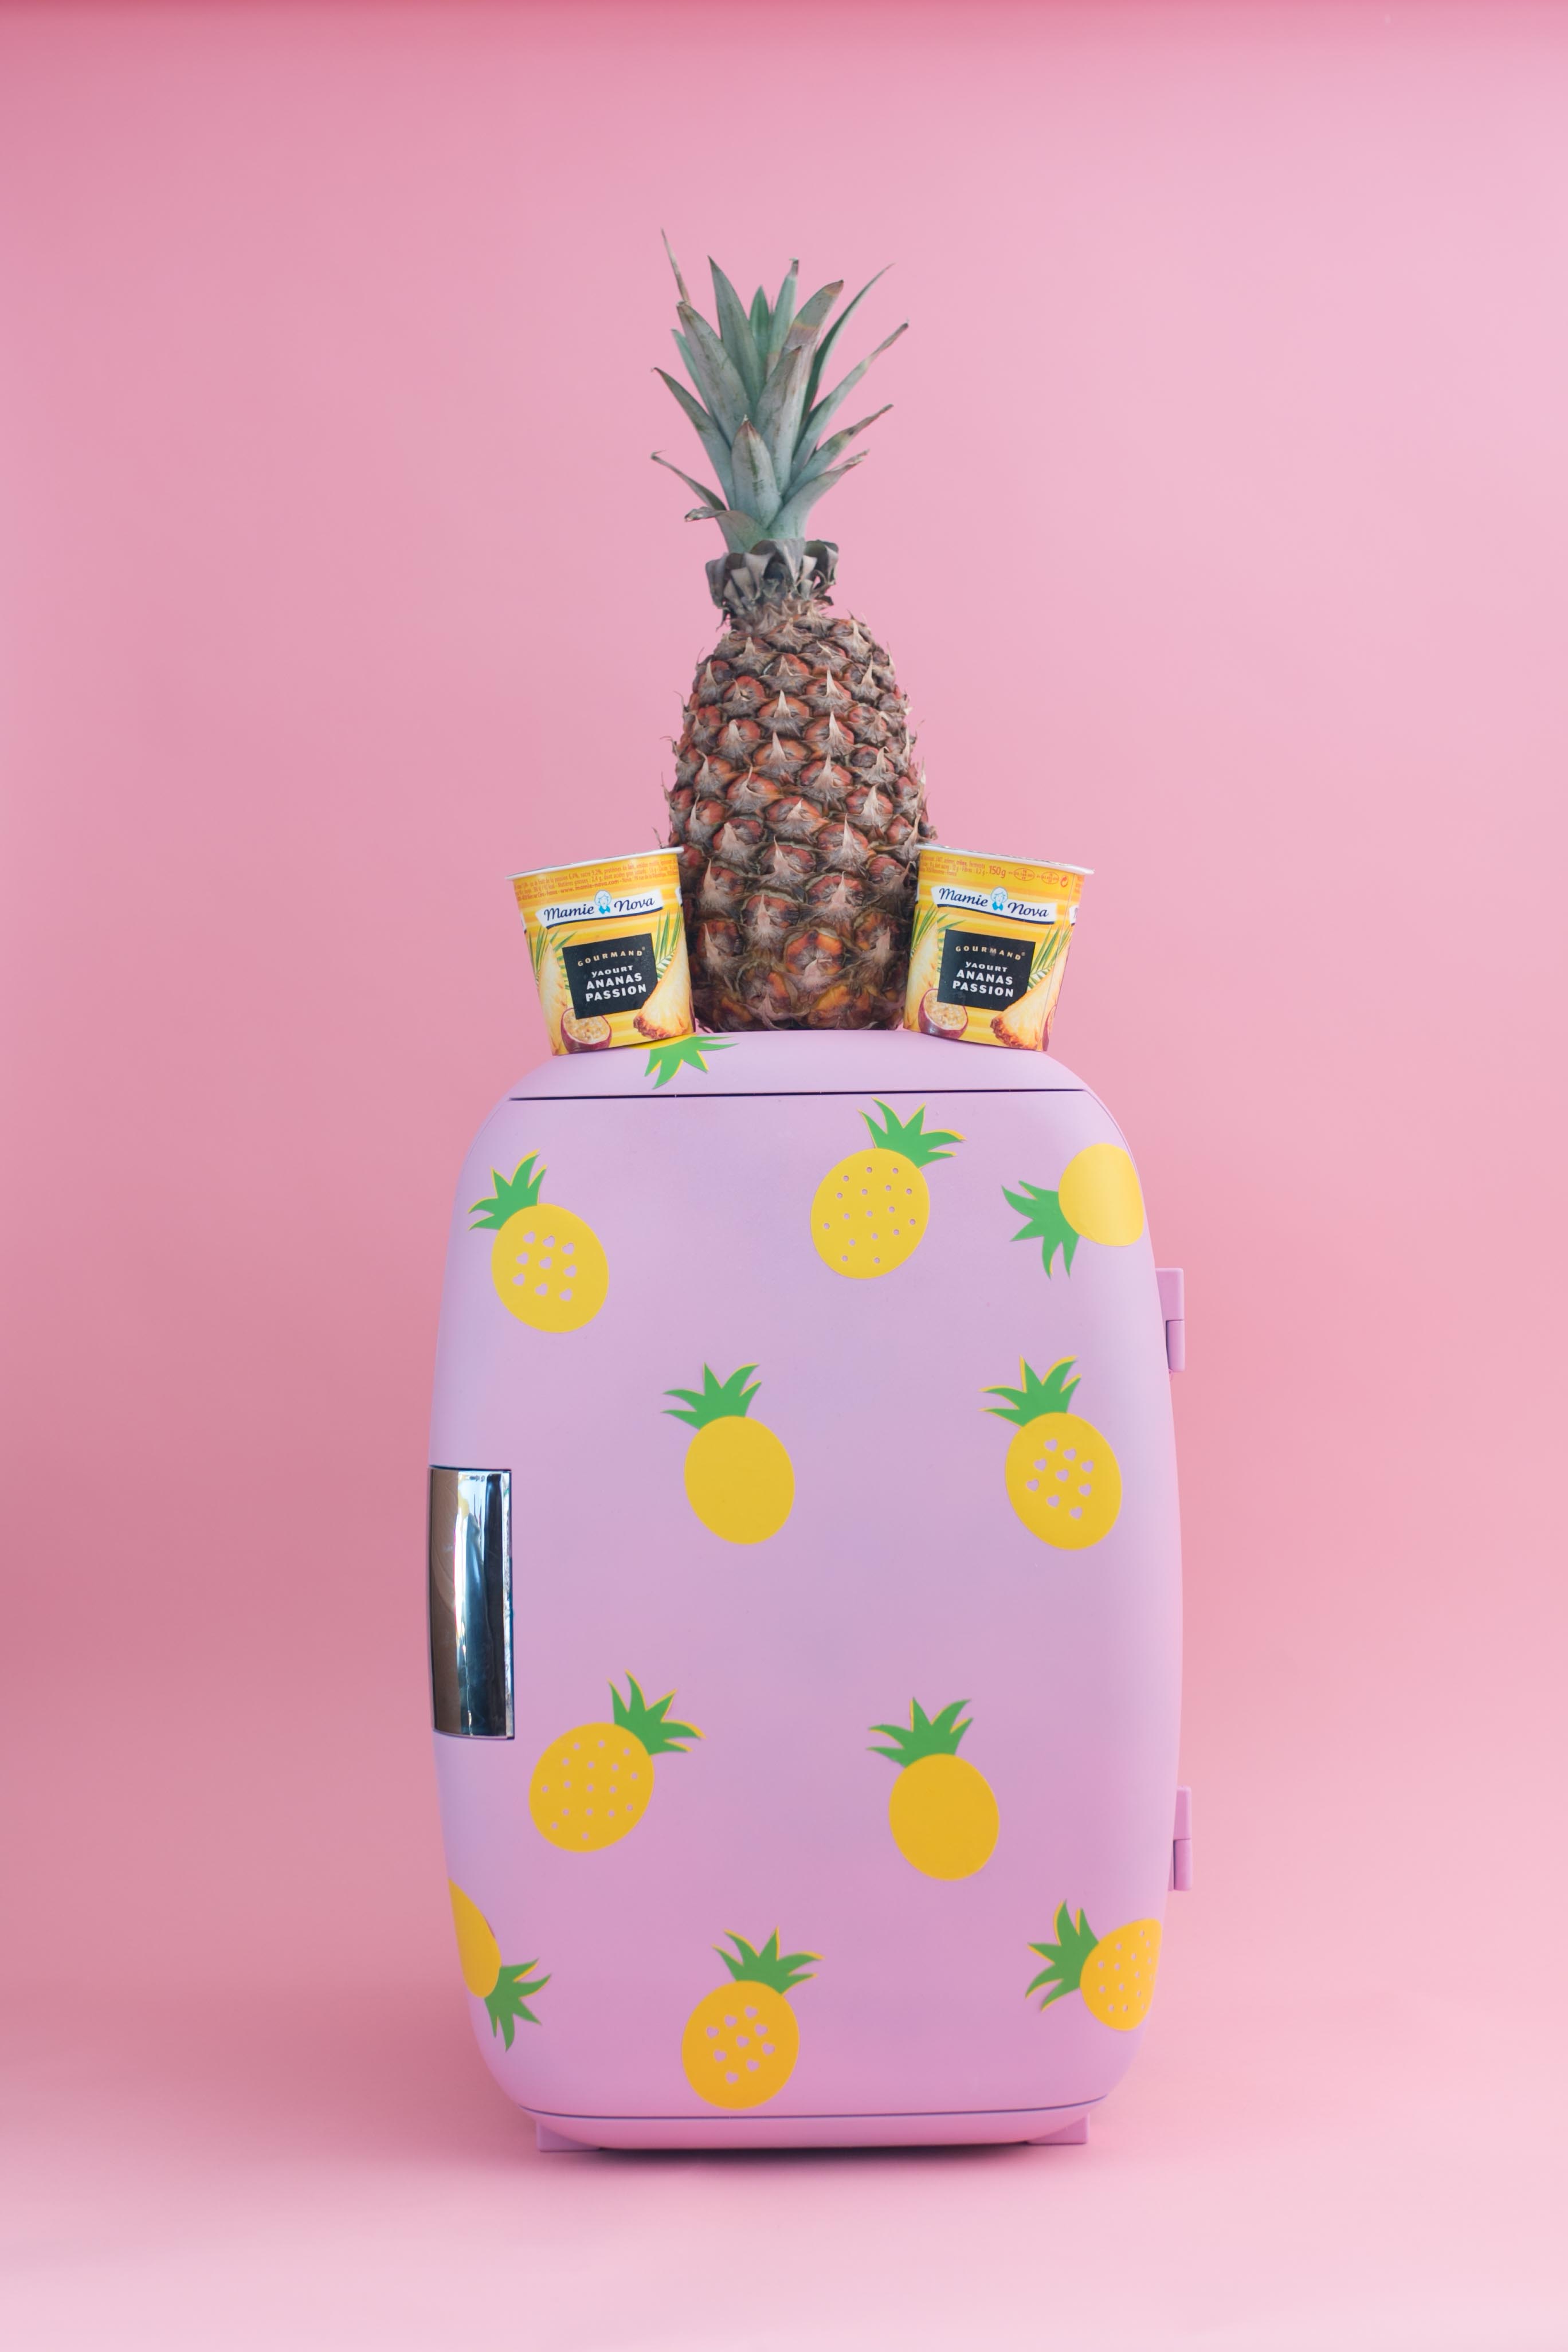 diy-frigo-anana-pineapple-fridge-i-sp4nkblog-x-mamie-nova